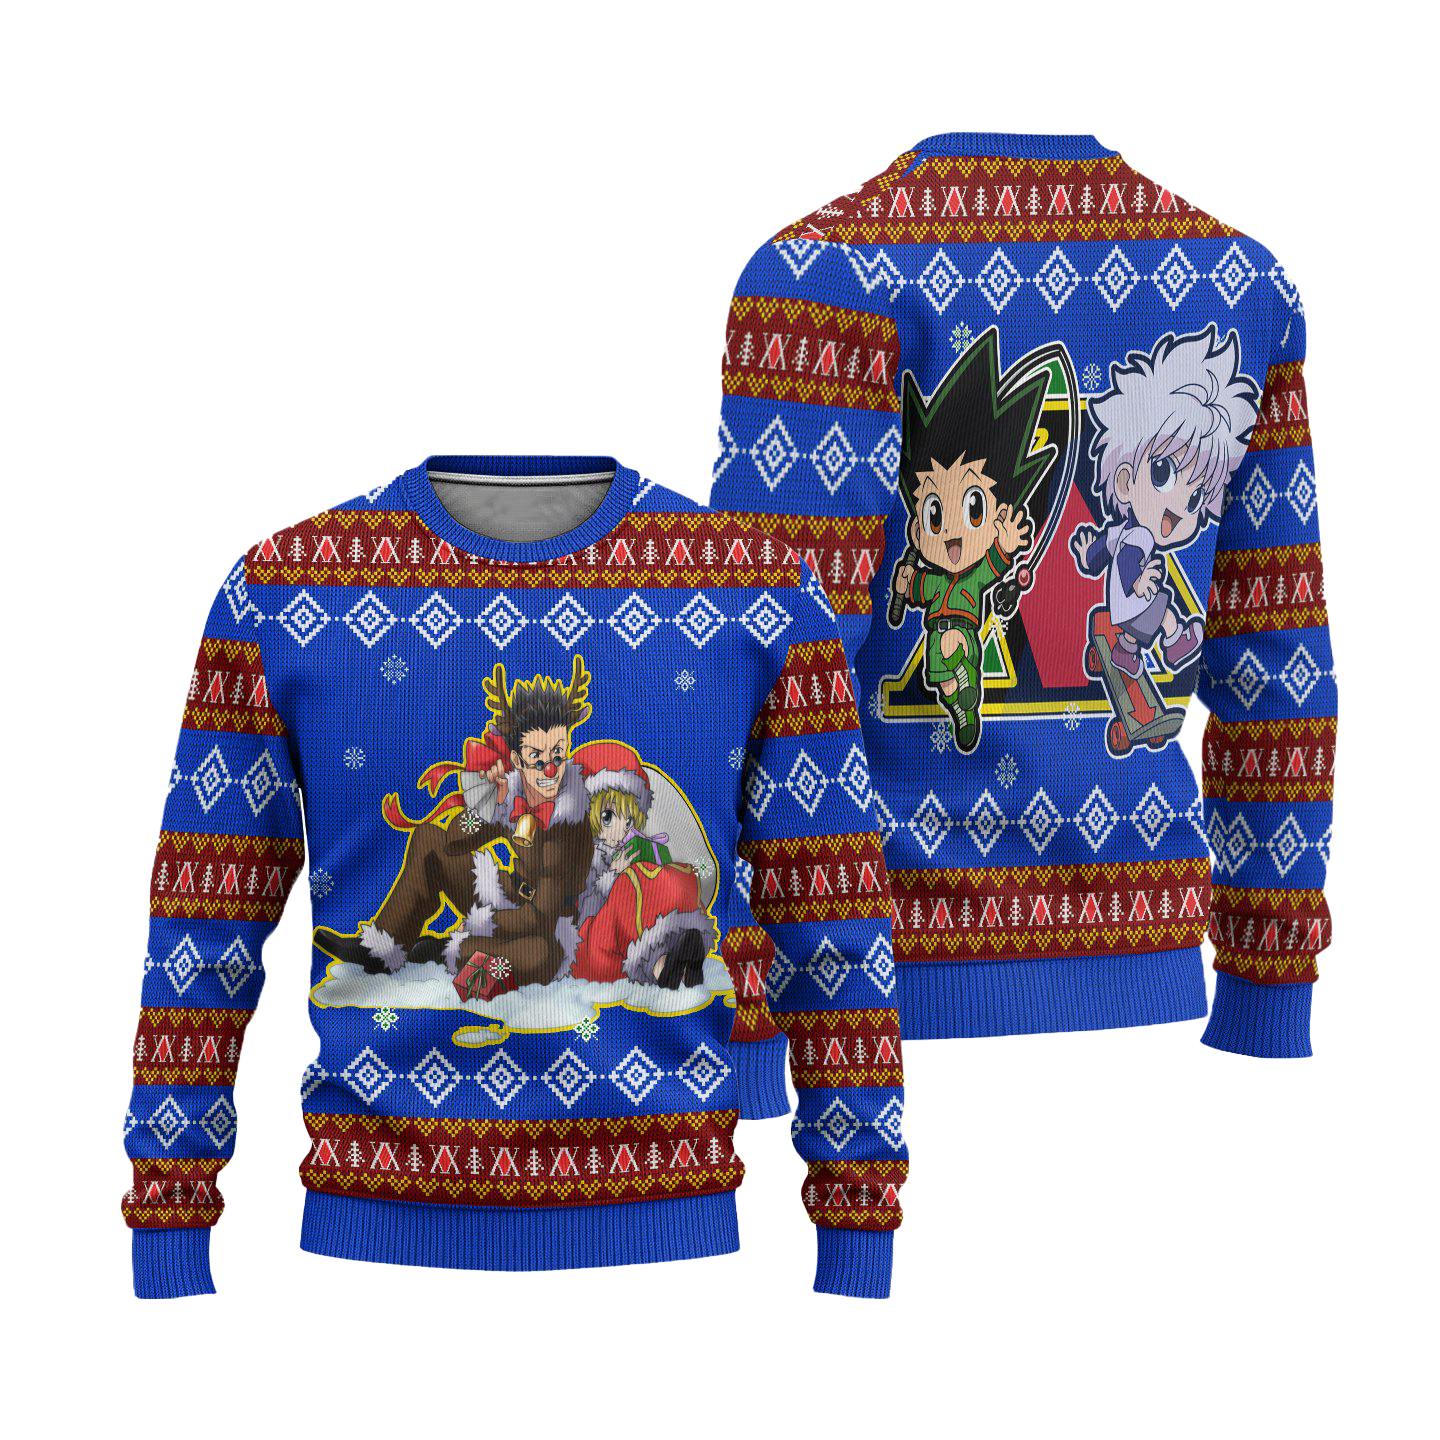 Leorio x Kurapika Anime Ugly Christmas Sweater Hunter x Hunter Xmas Gift